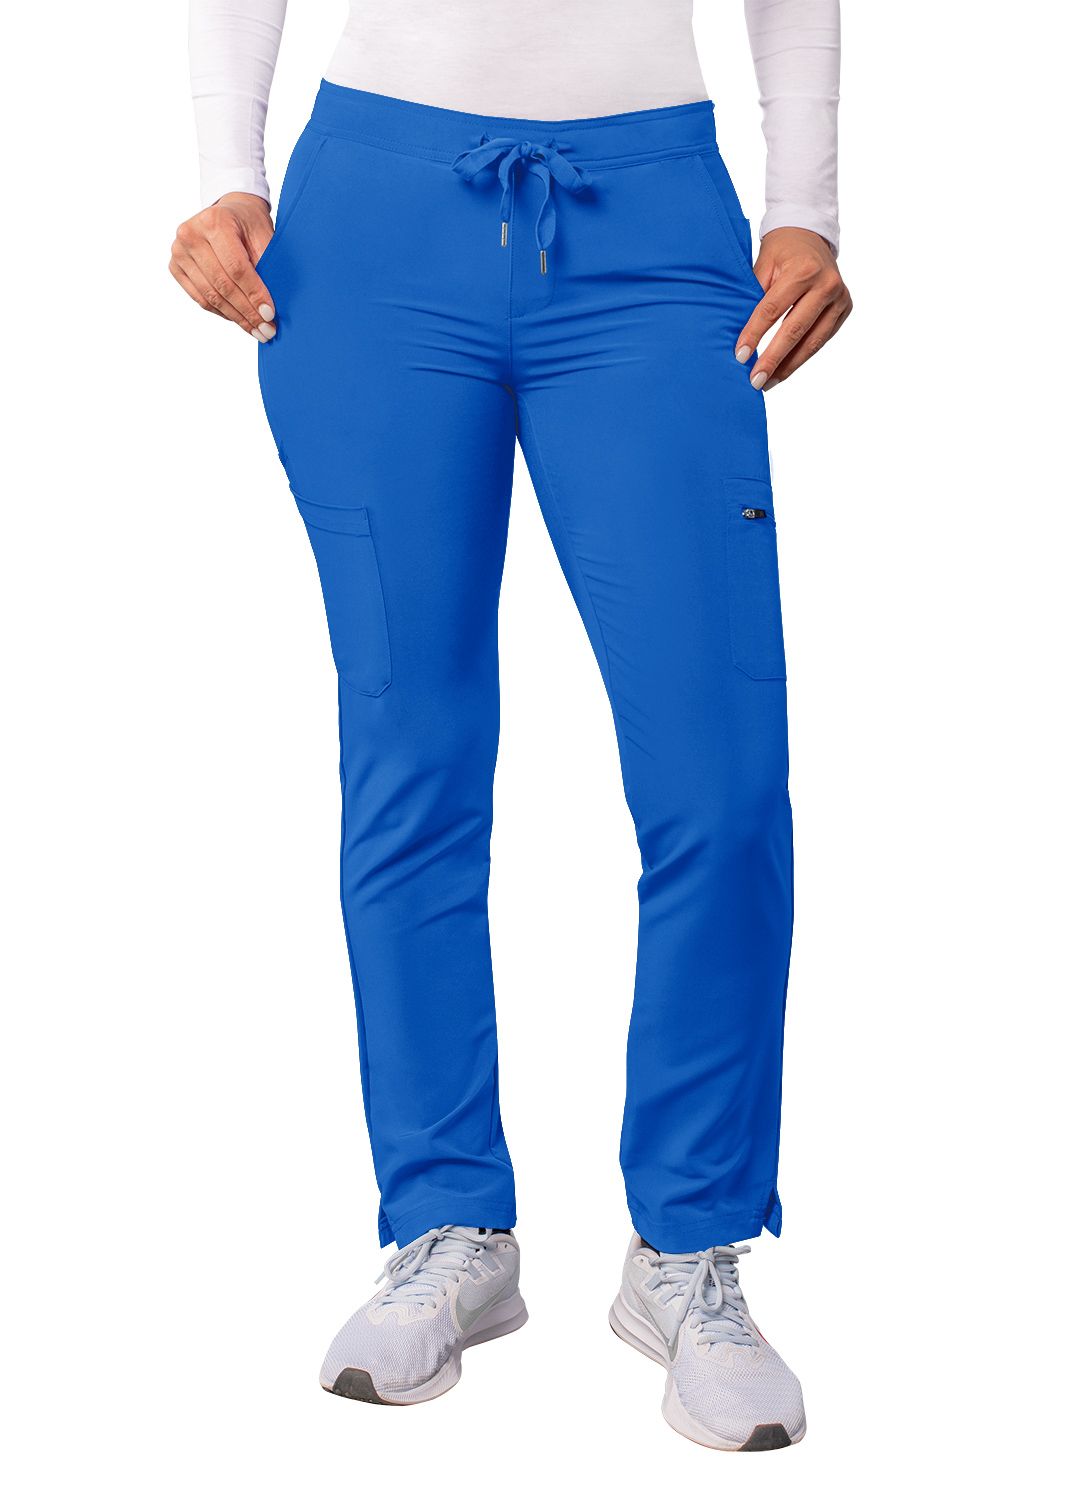 Addition Women's Skinny Leg Cargo Pant  by Adar (Tall) XXS-3XL / ROYAL BLUE